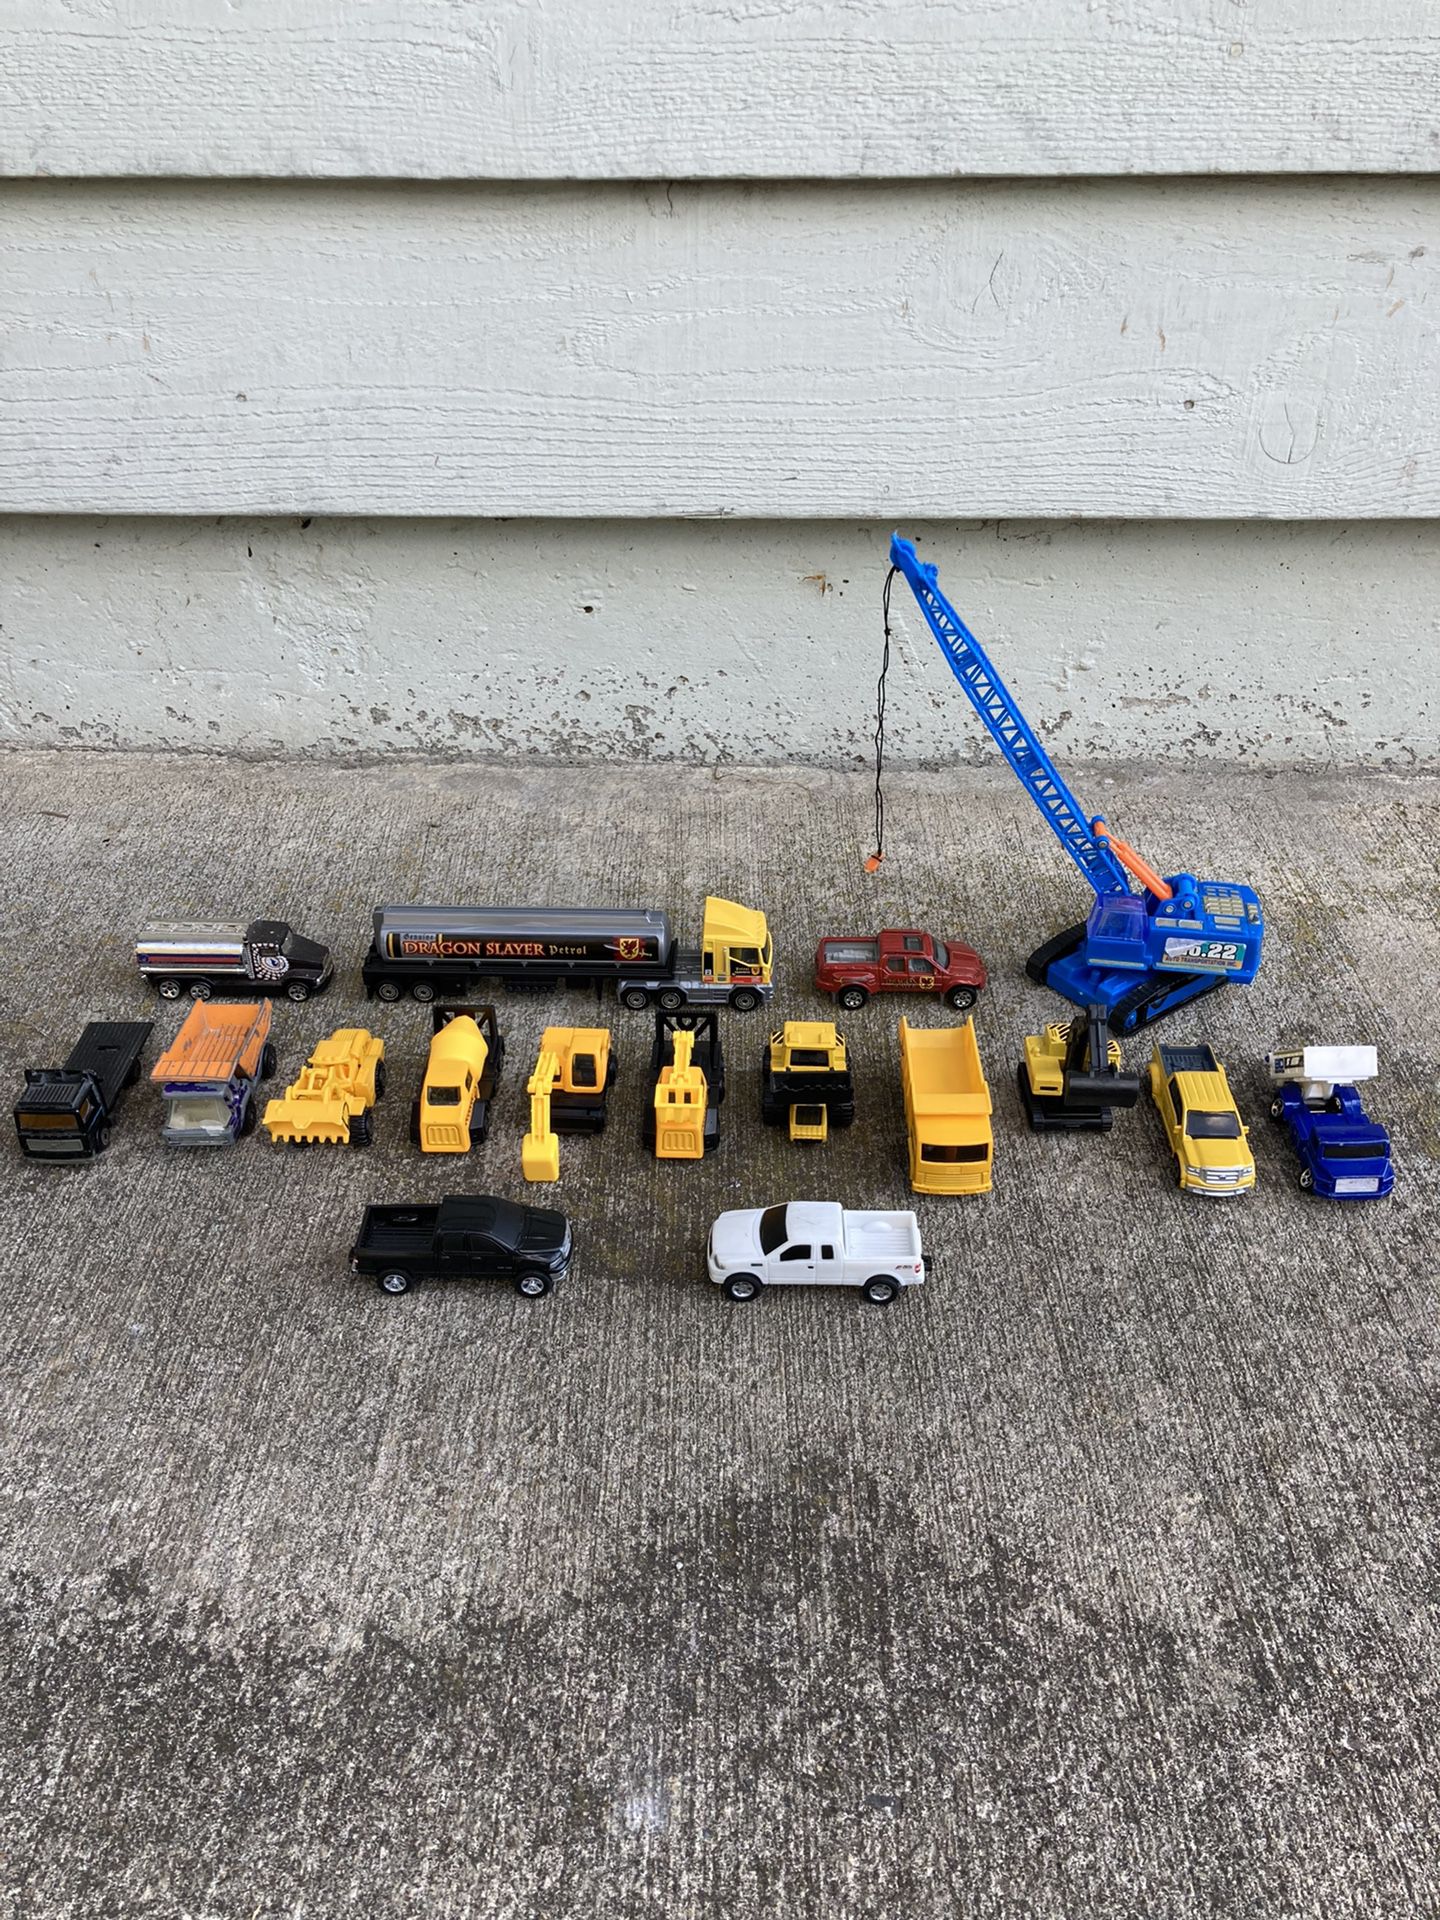 Matchbox Hot Wheels Construction Trucks Equipment Toys 